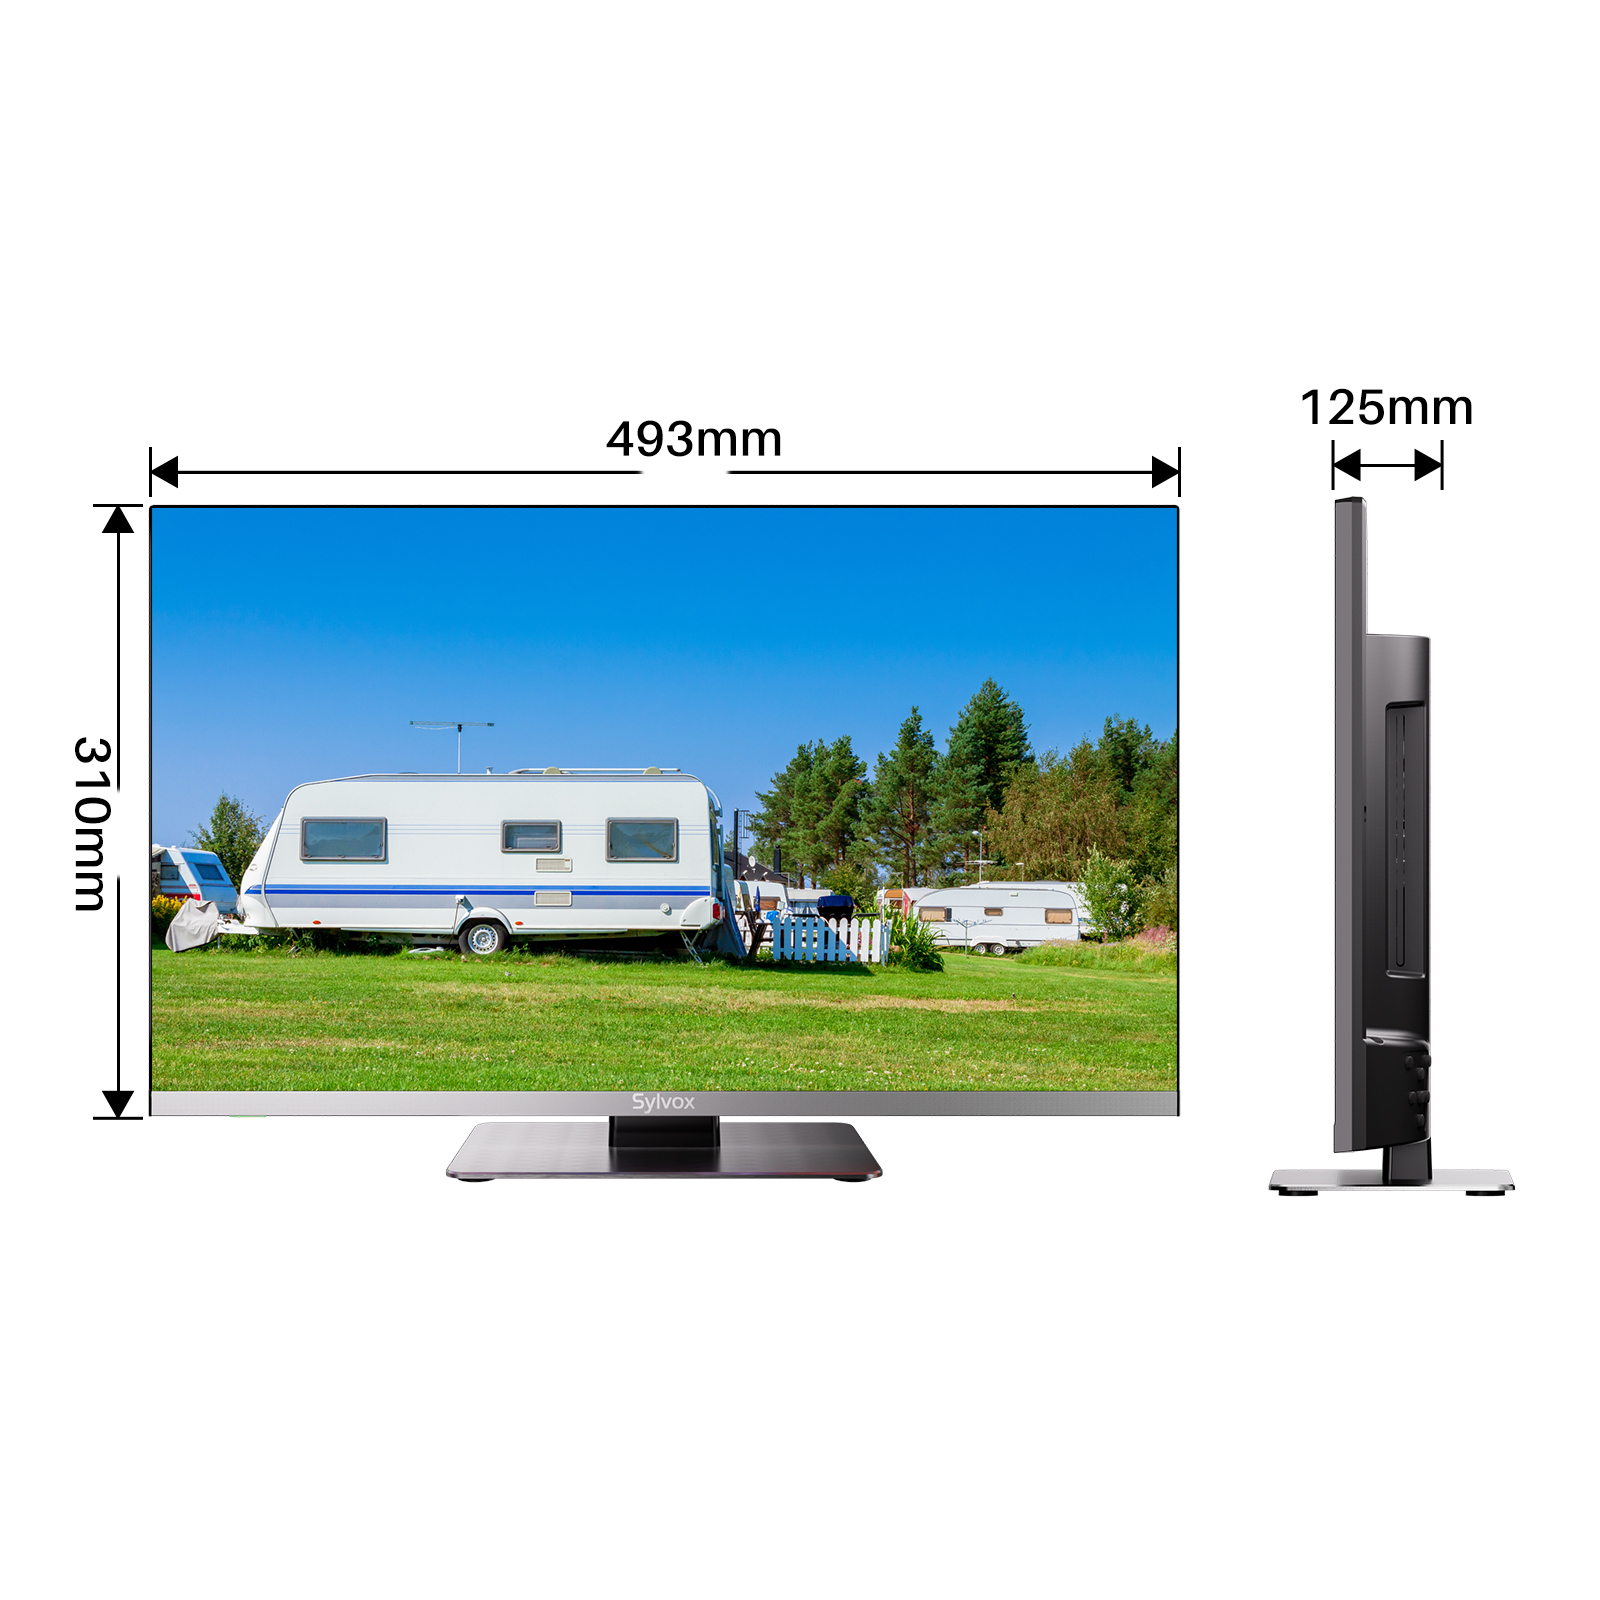 Zoll TV) SMART DVD TV TV Zoll (Flat, Full-HD, / SYLVOX 22 22 Eingebauter 55,88 48.25MHz-863.25MHz 12V cm, Player